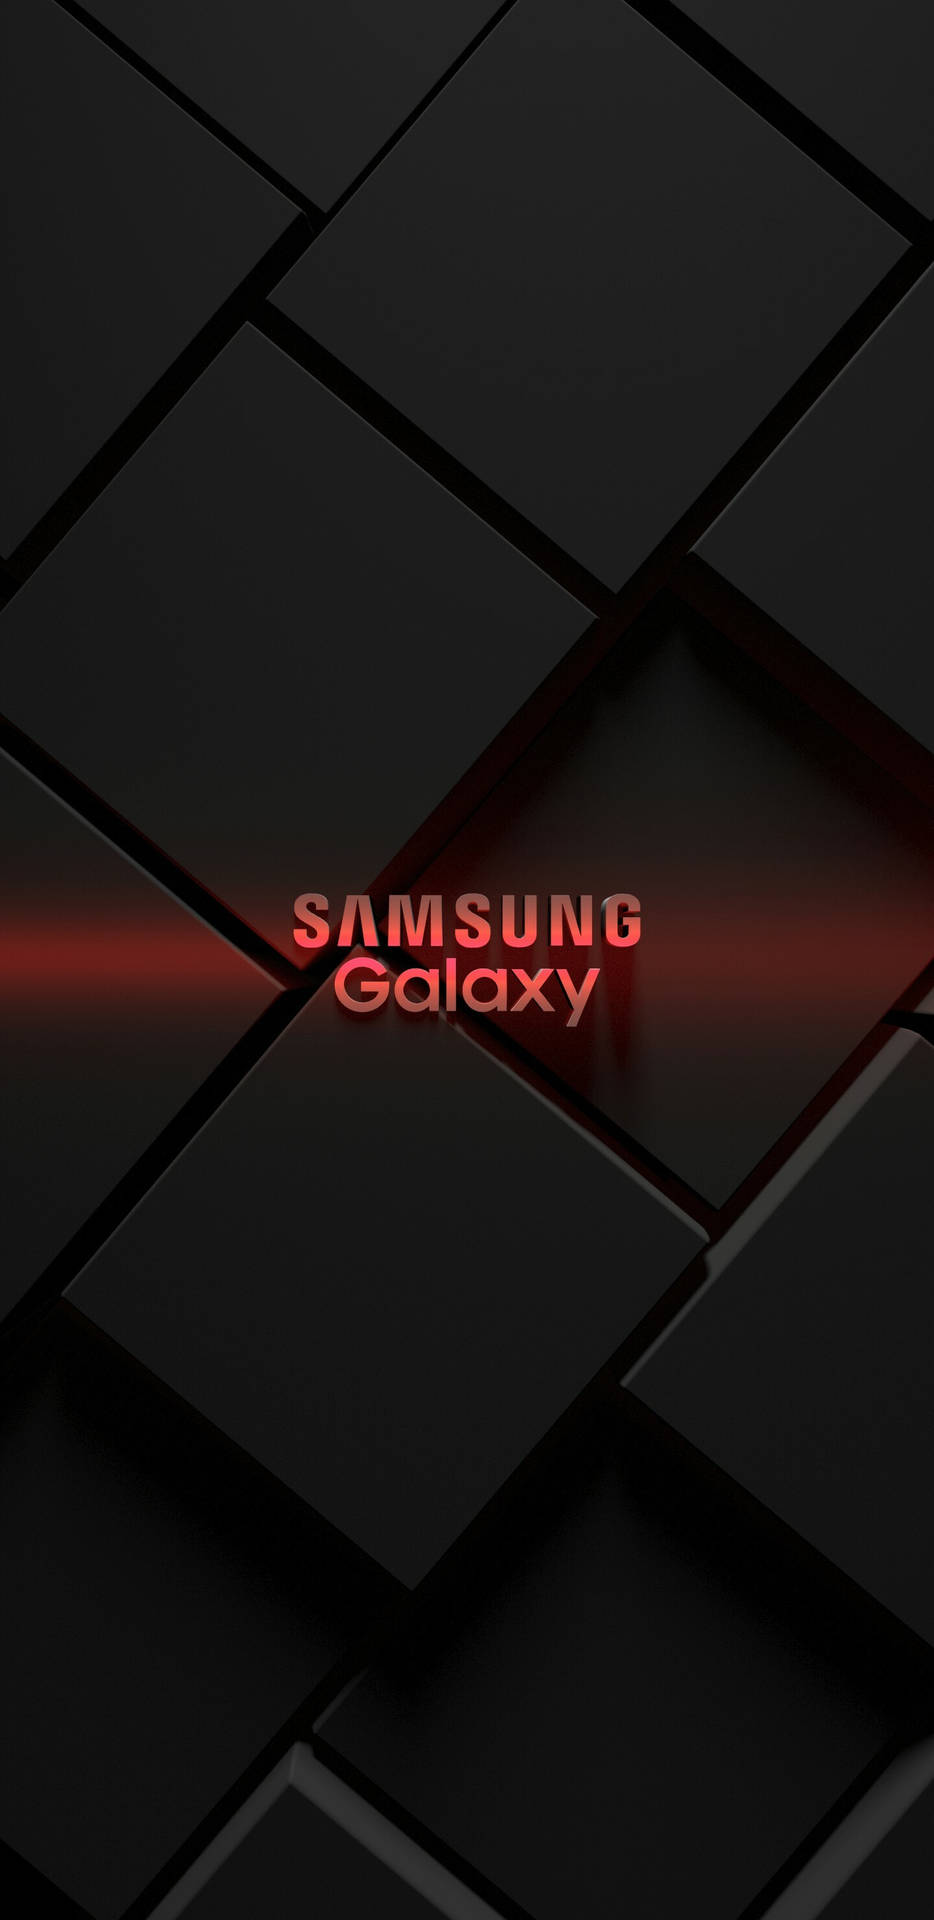 Samsung Galaxy Geometric Red Light Background